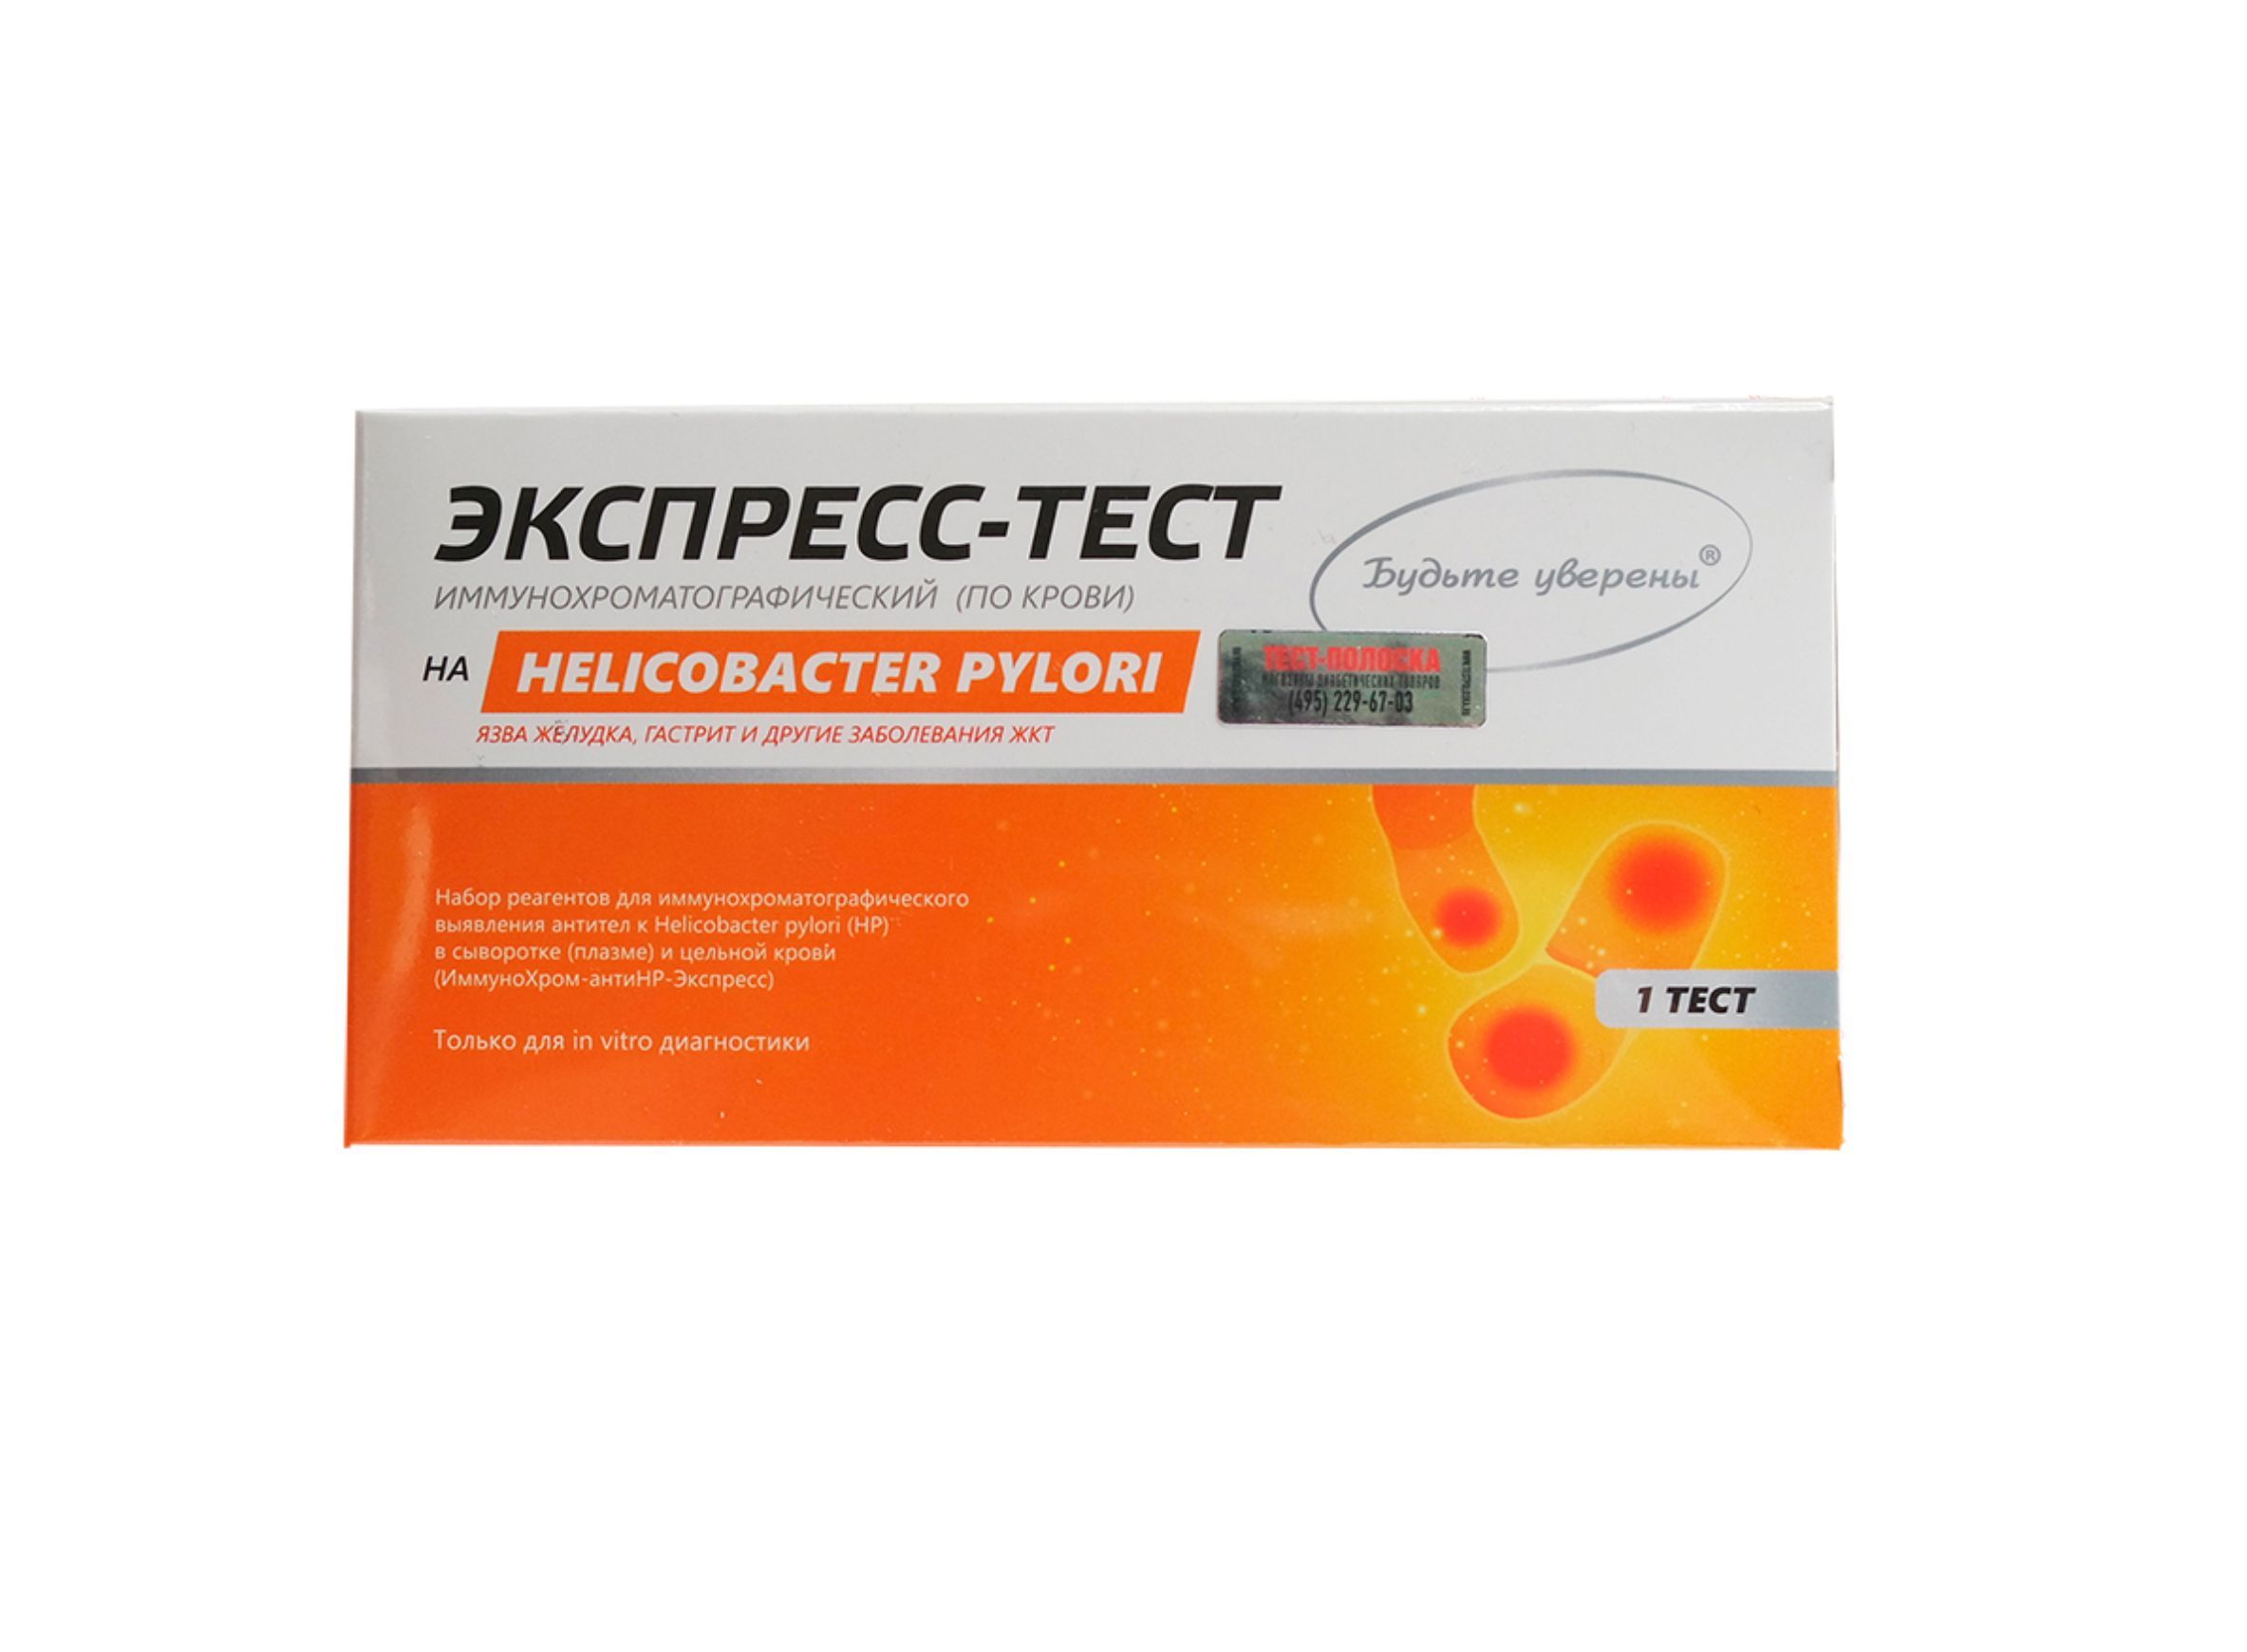 Экспресс-тест Хеликобактер пилори (Helicobacter pylori)